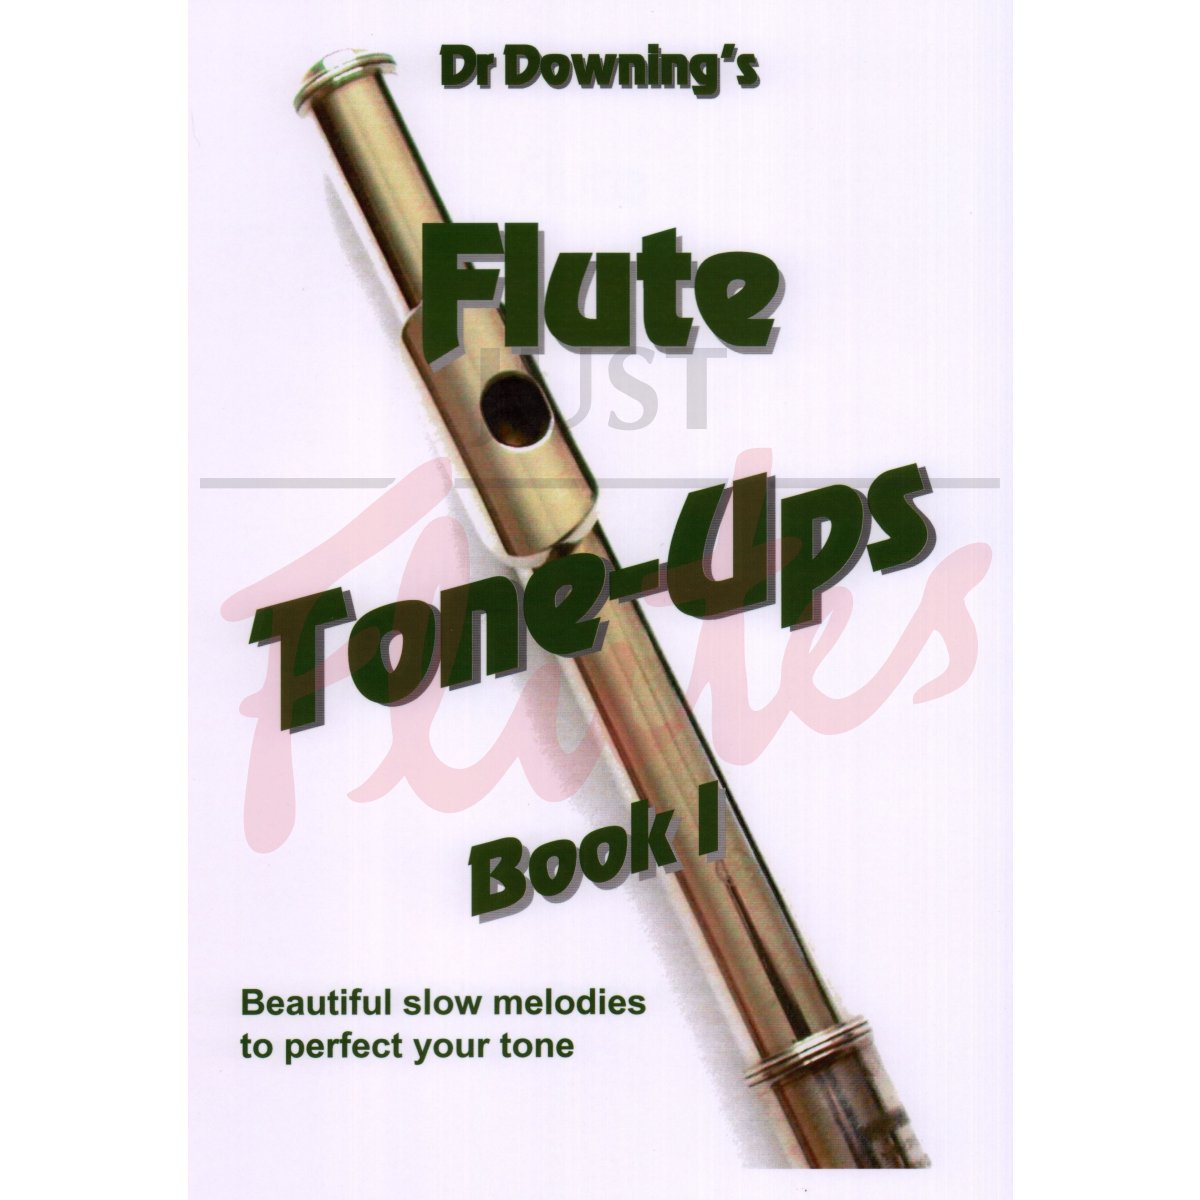 Flute Tone-Ups Book 1